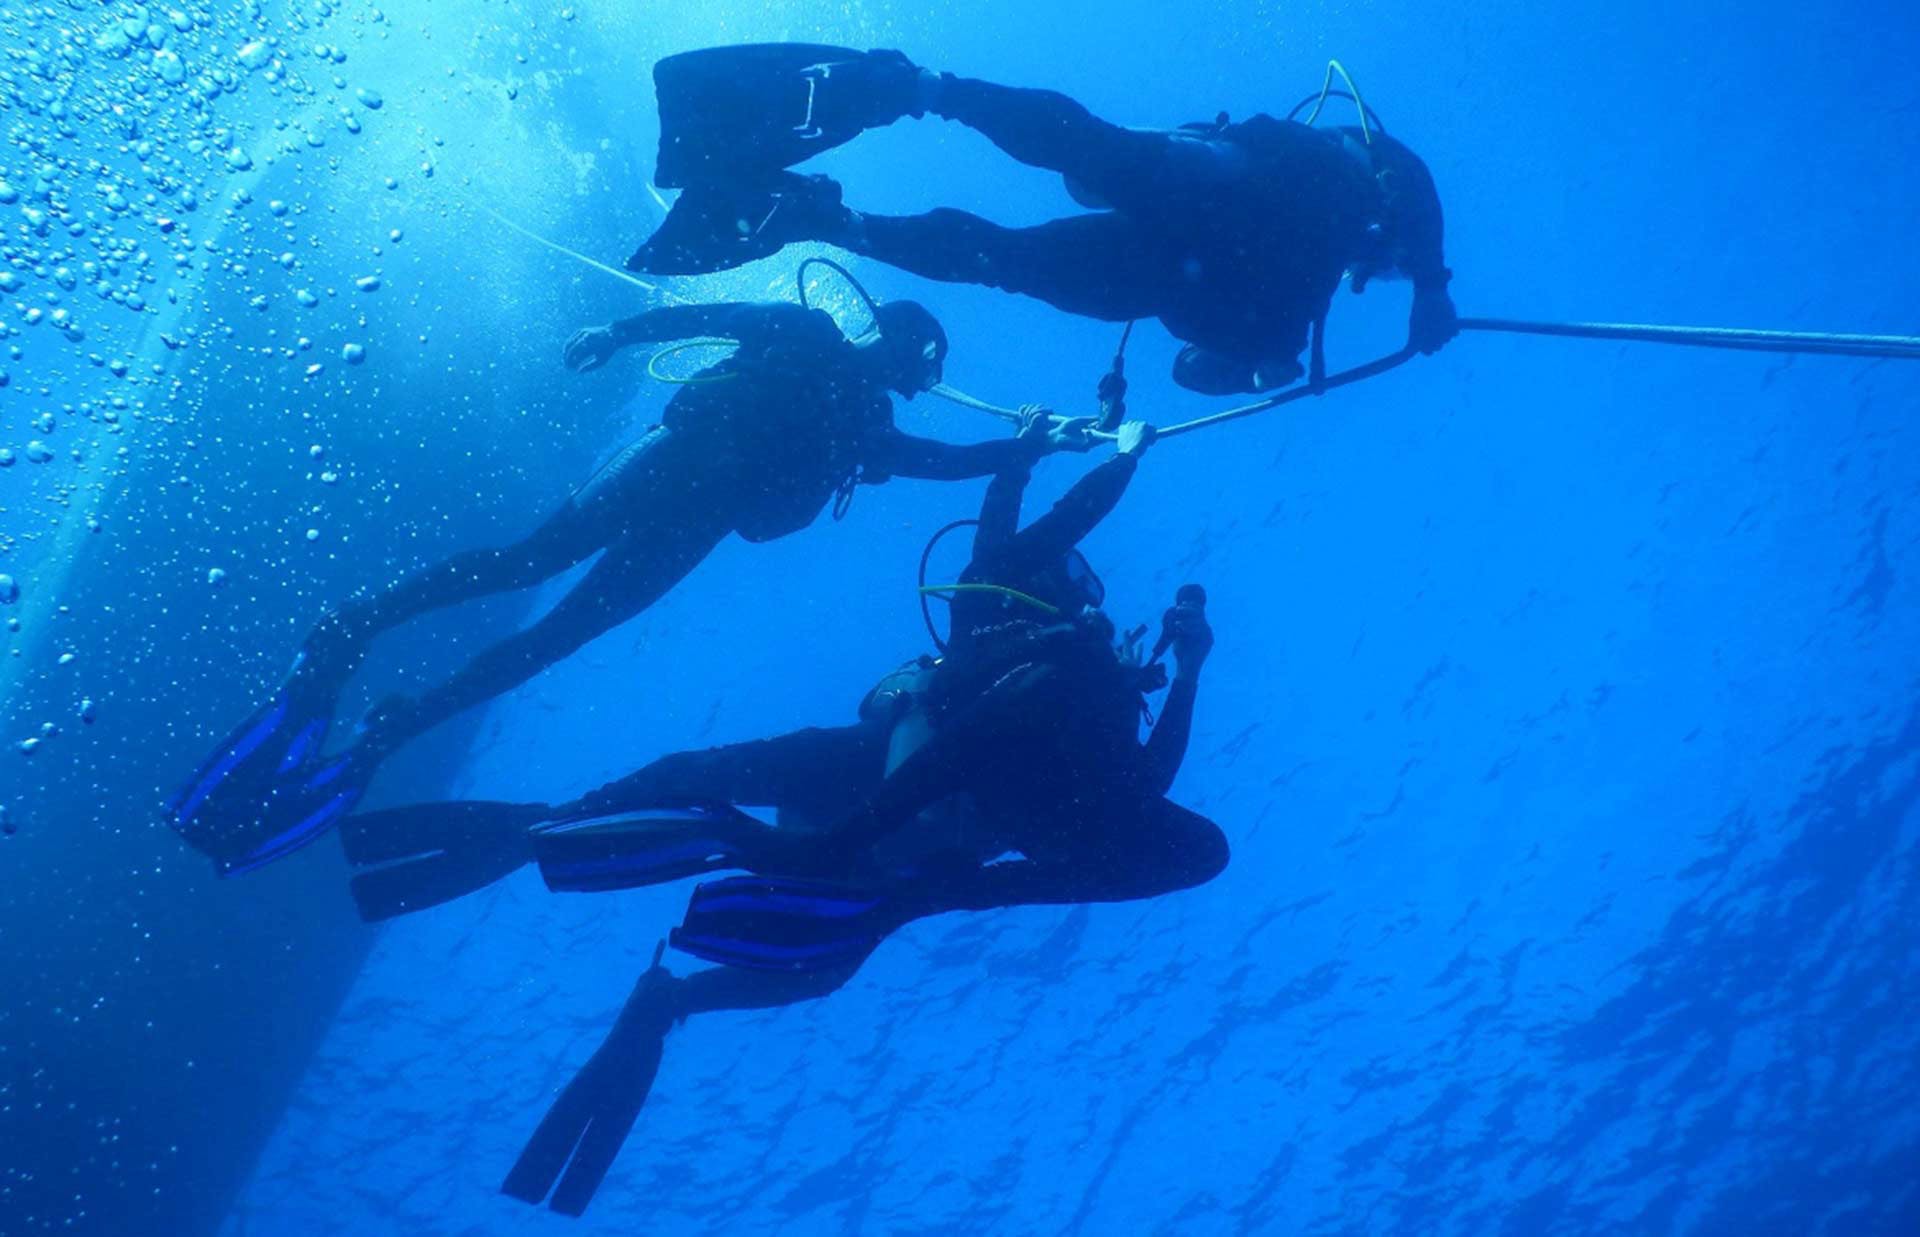 Scuba diving,Underwater diving,Water,Blue,Underwater,Divemaster,Diving equipment,Recreation,Dry suit,Swimfin